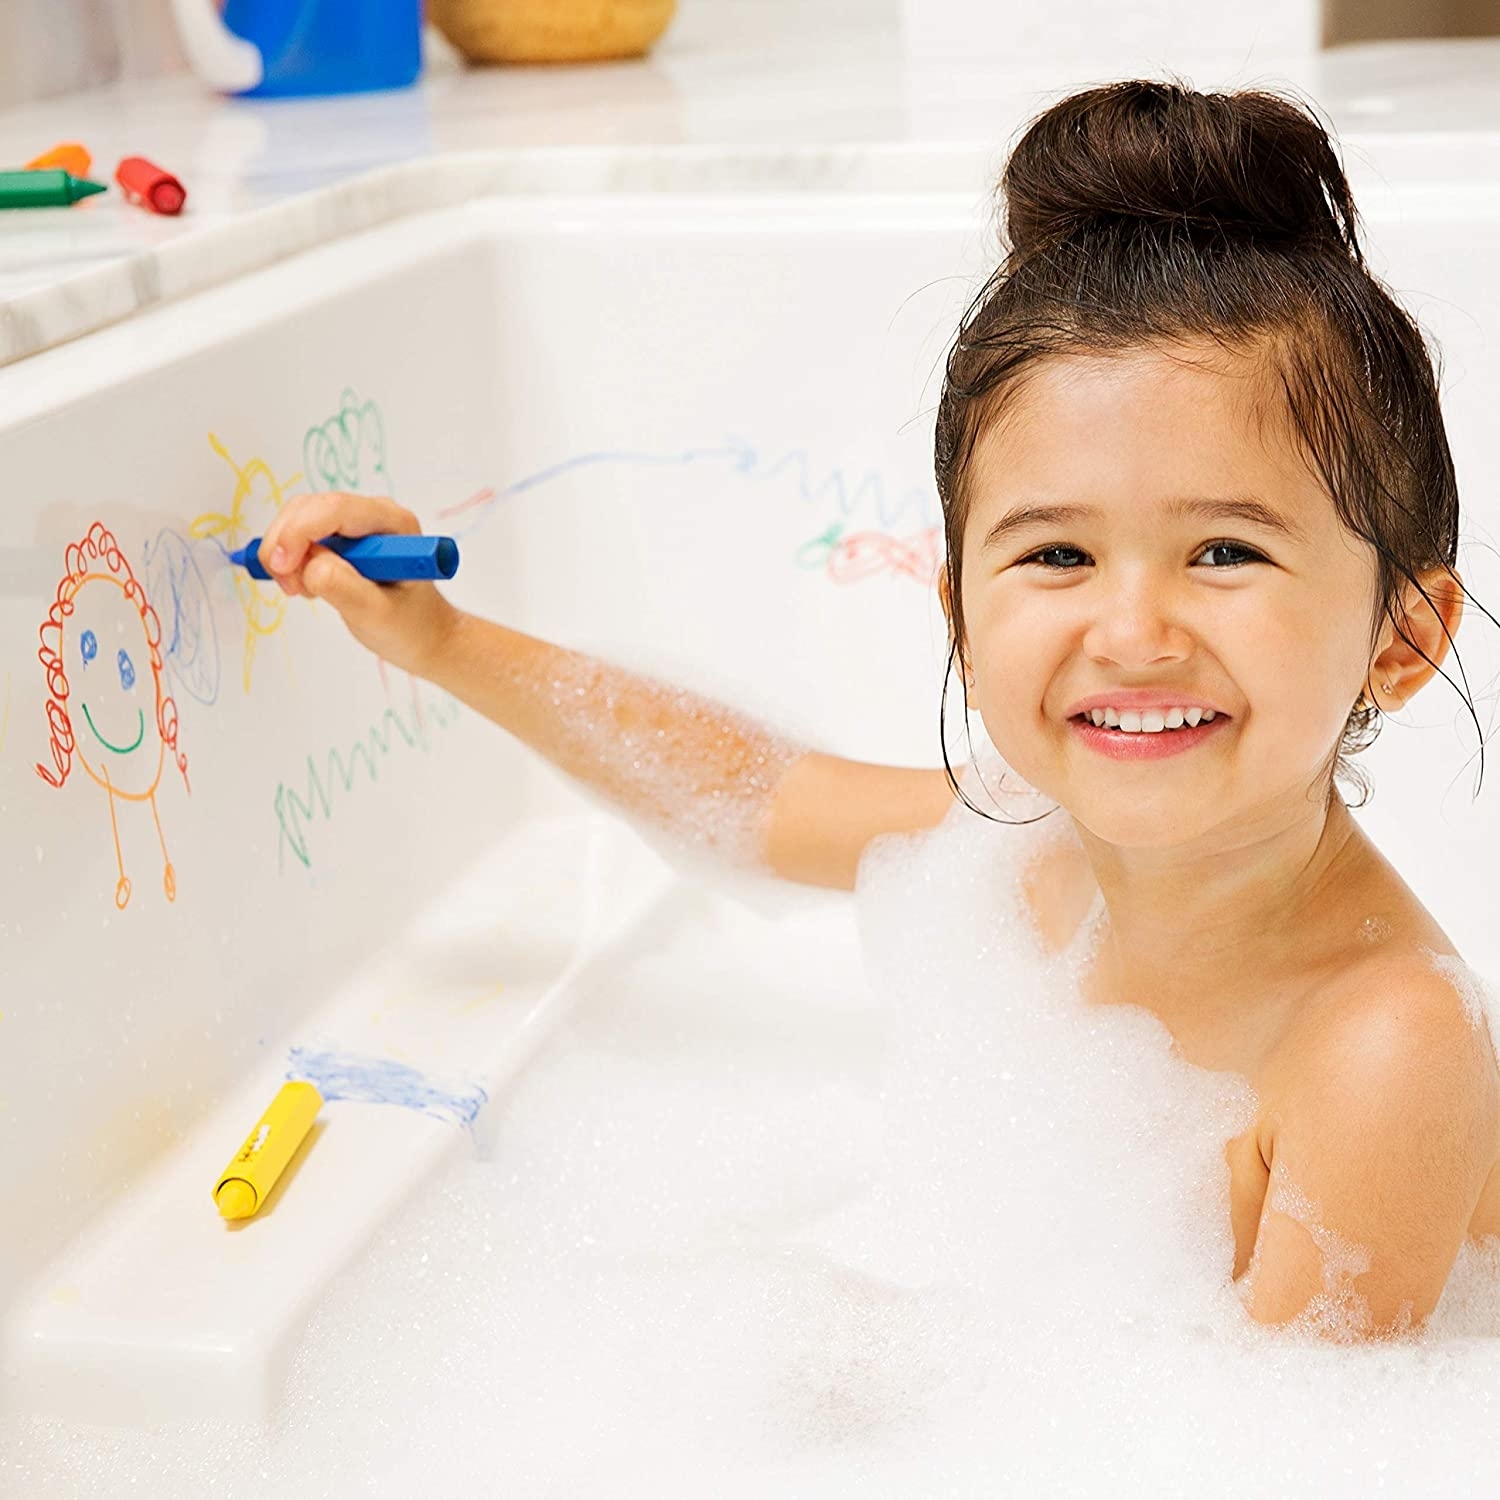 child drawing on edge of bath tub while having a bubble bath